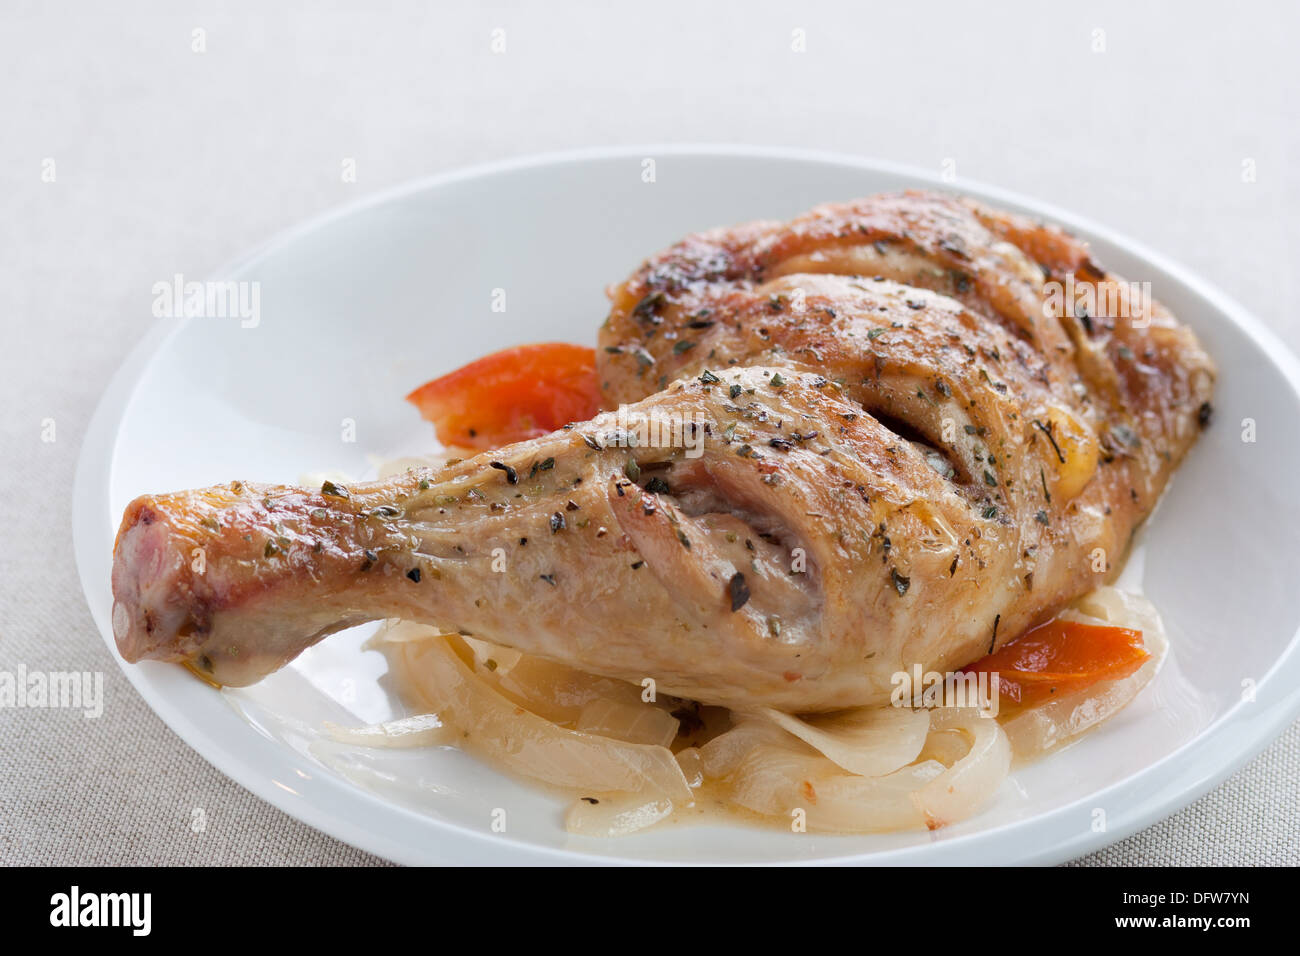 Roast chicken on a dish Stock Photo